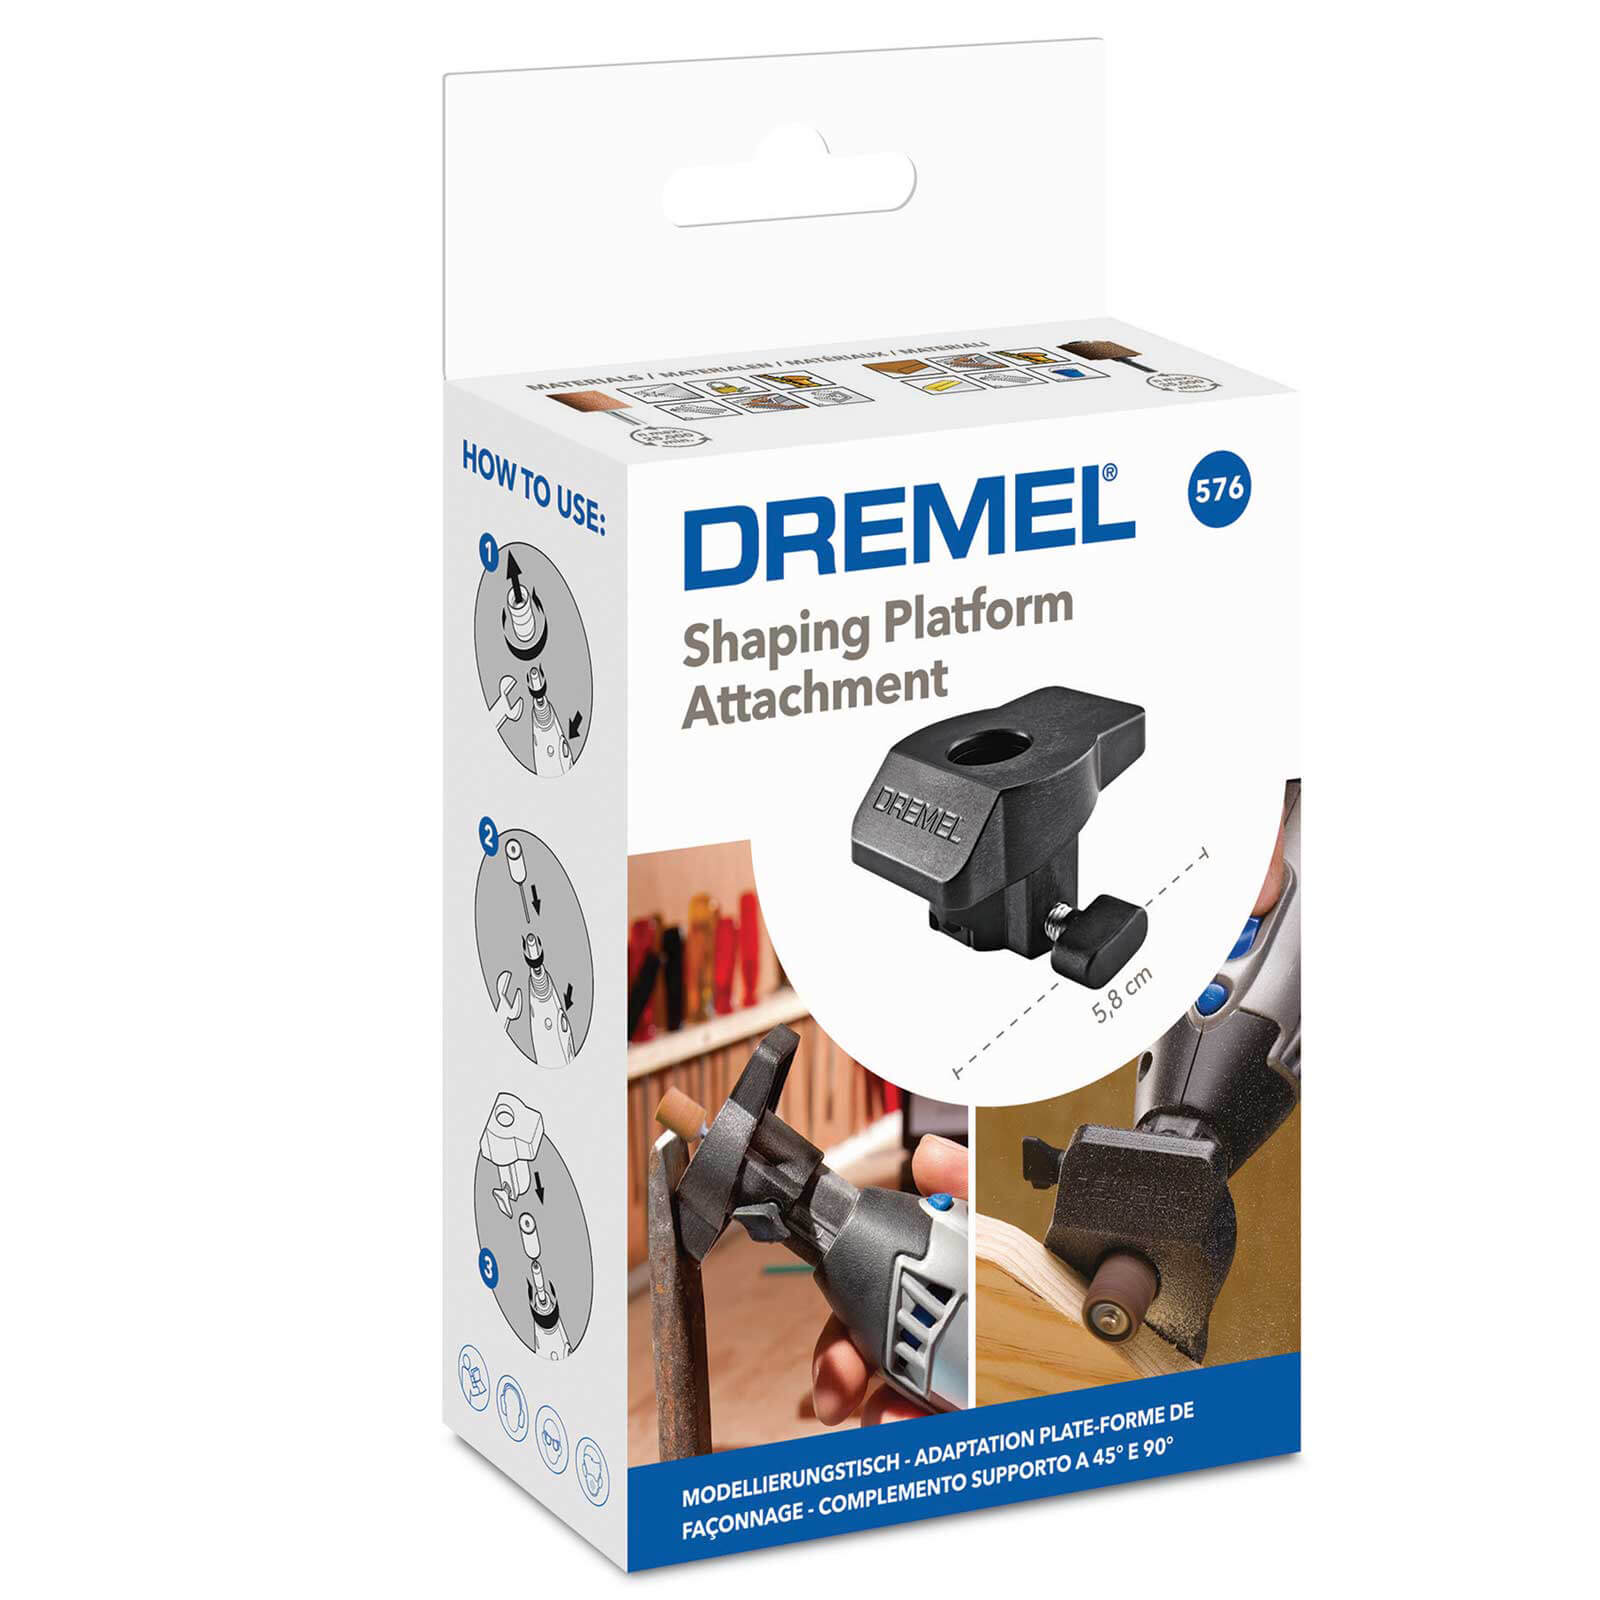 Image of Dremel 576 Rotary Multi Tool Shaping Platform Attachment Kit